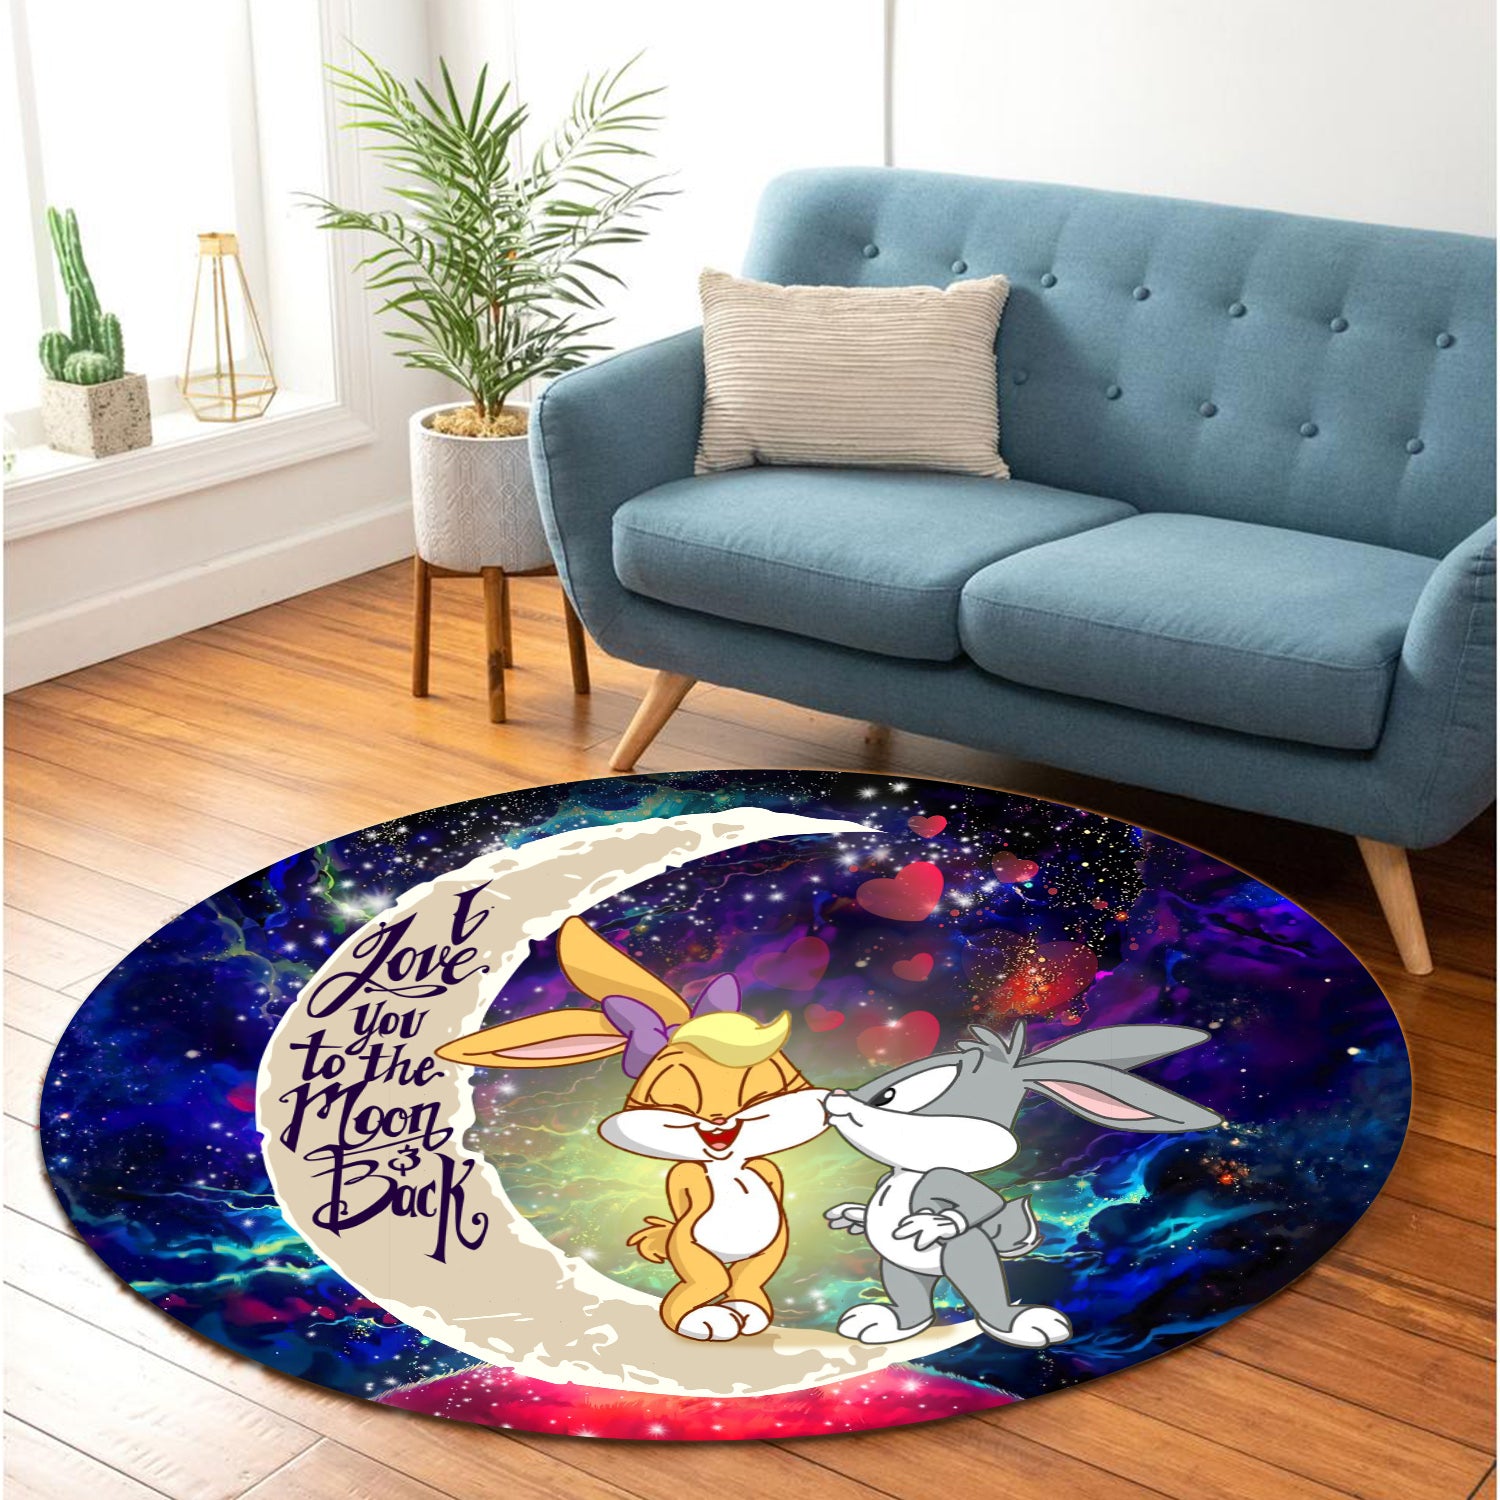 Bunny Couple Love You To The Moon Galaxy Round Carpet Rug Bedroom Livingroom Home Decor Nearkii